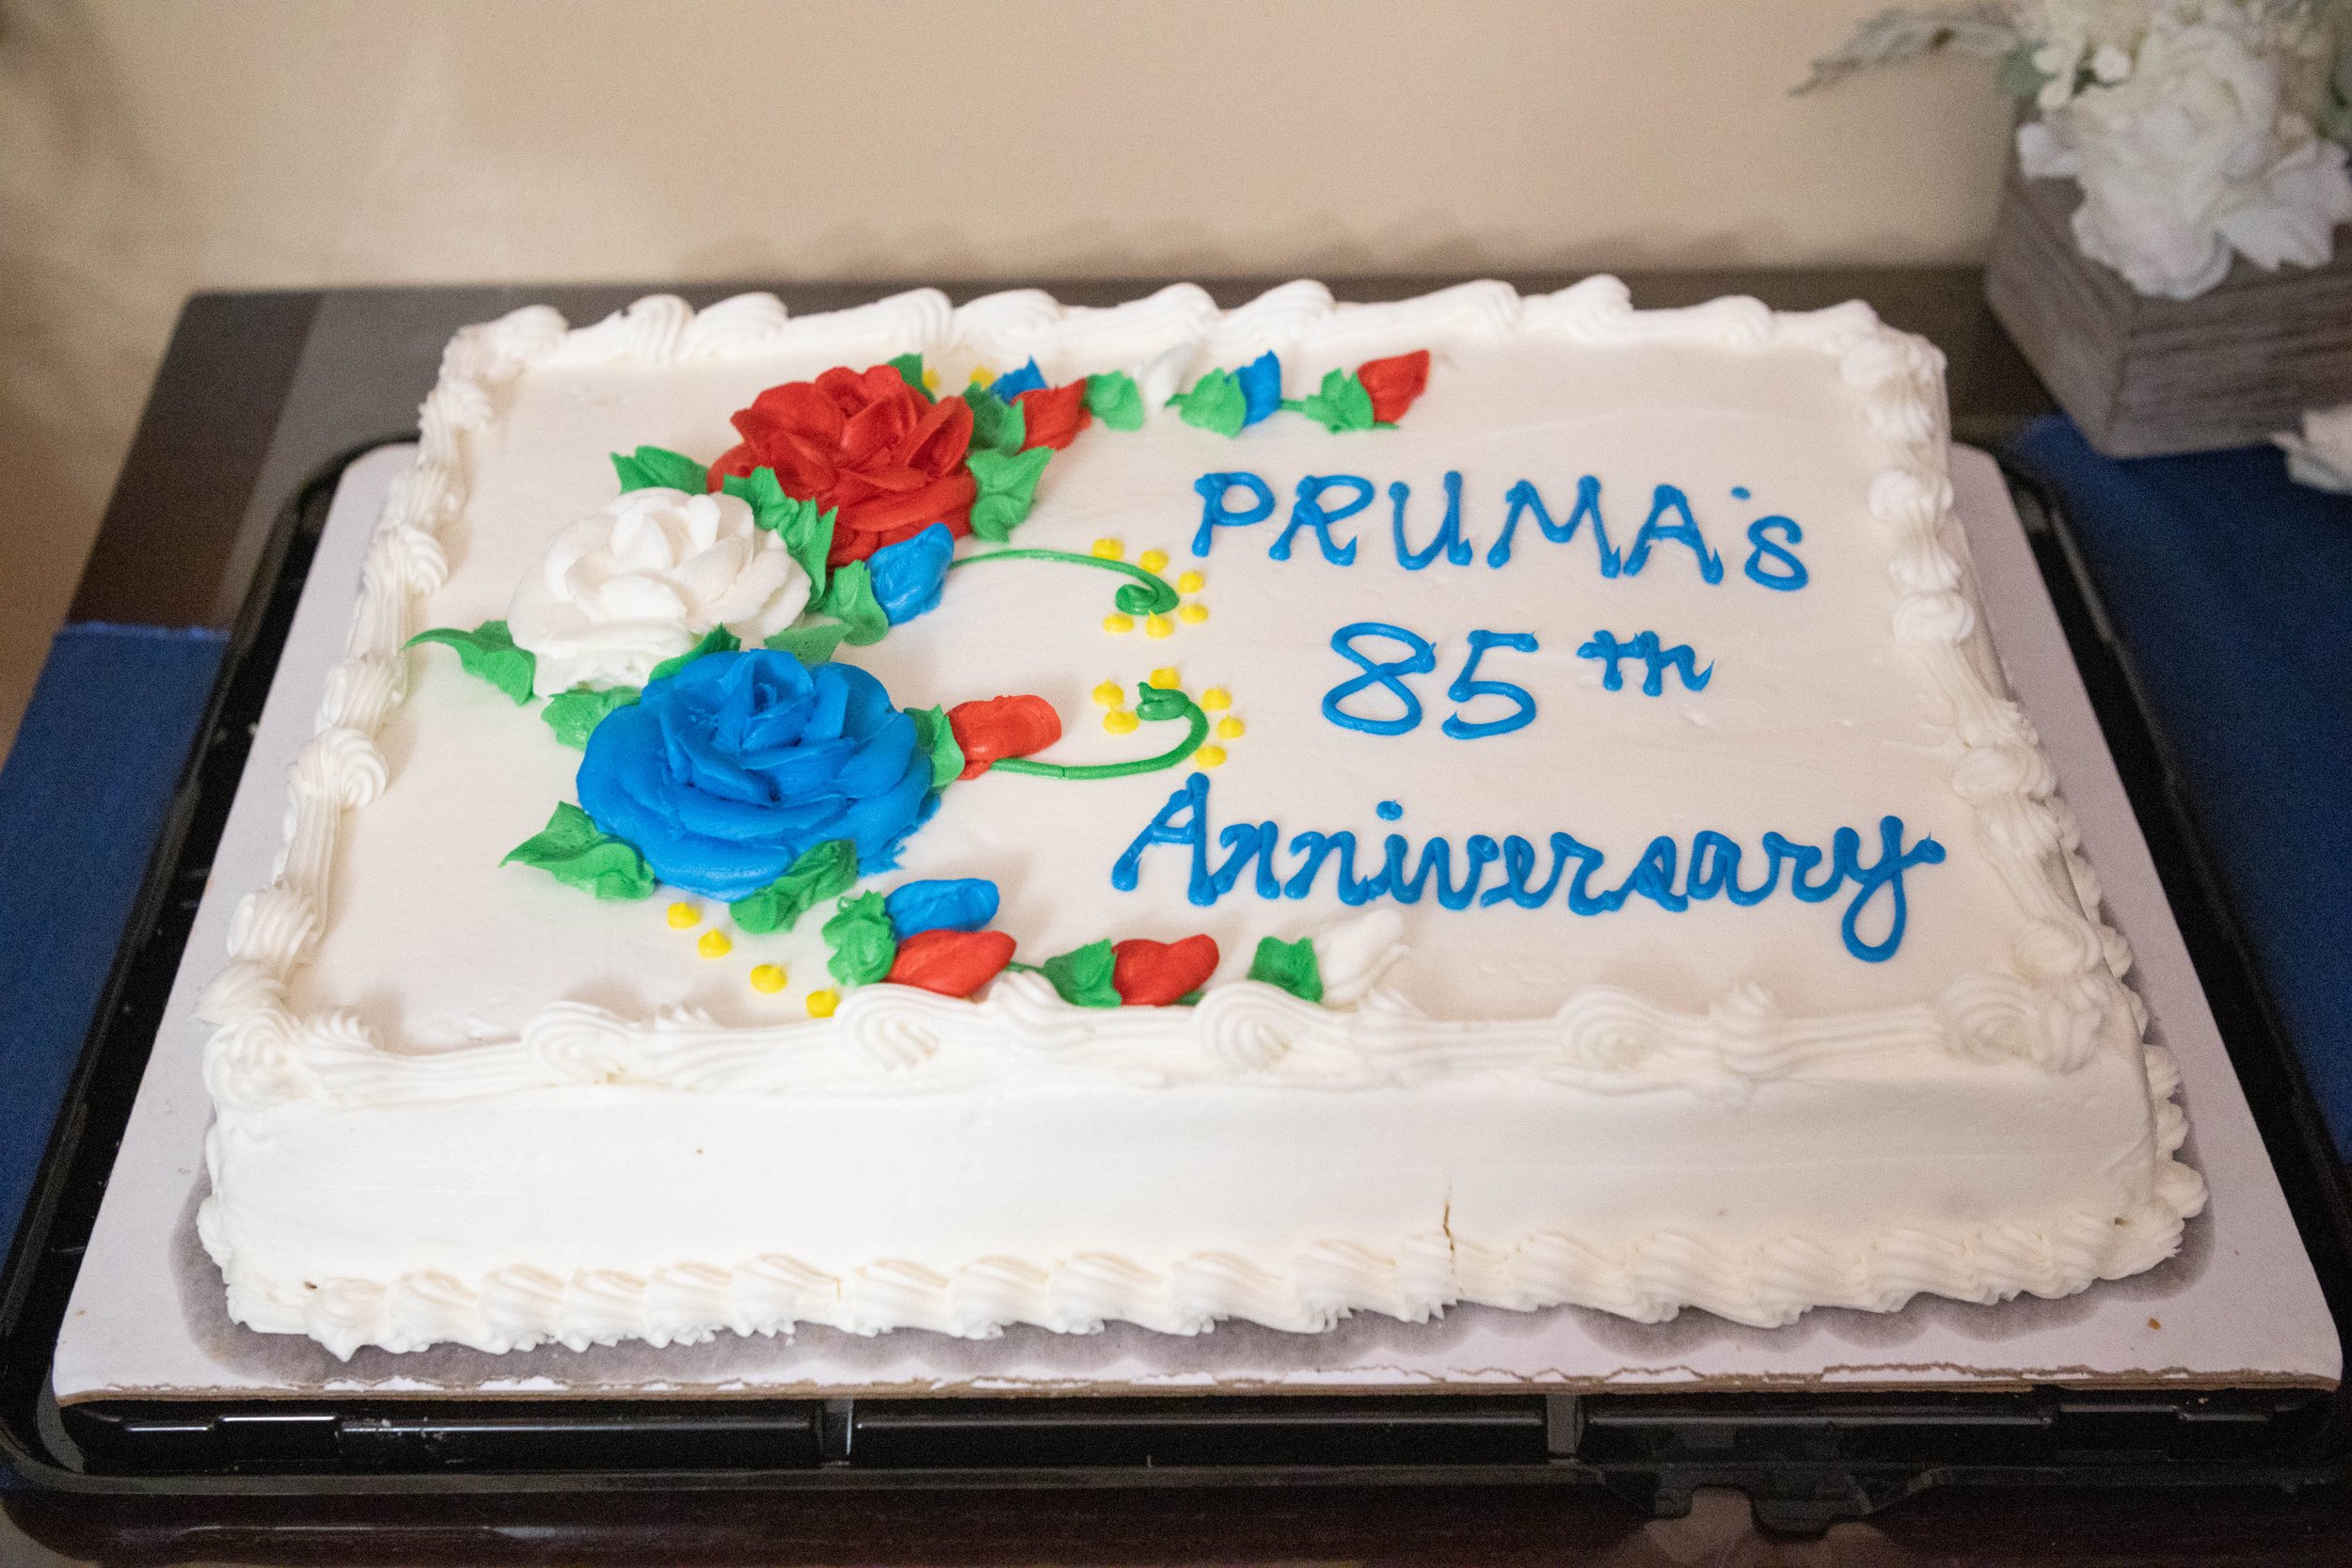 Pruma 85th Anniversary-0310.jpg